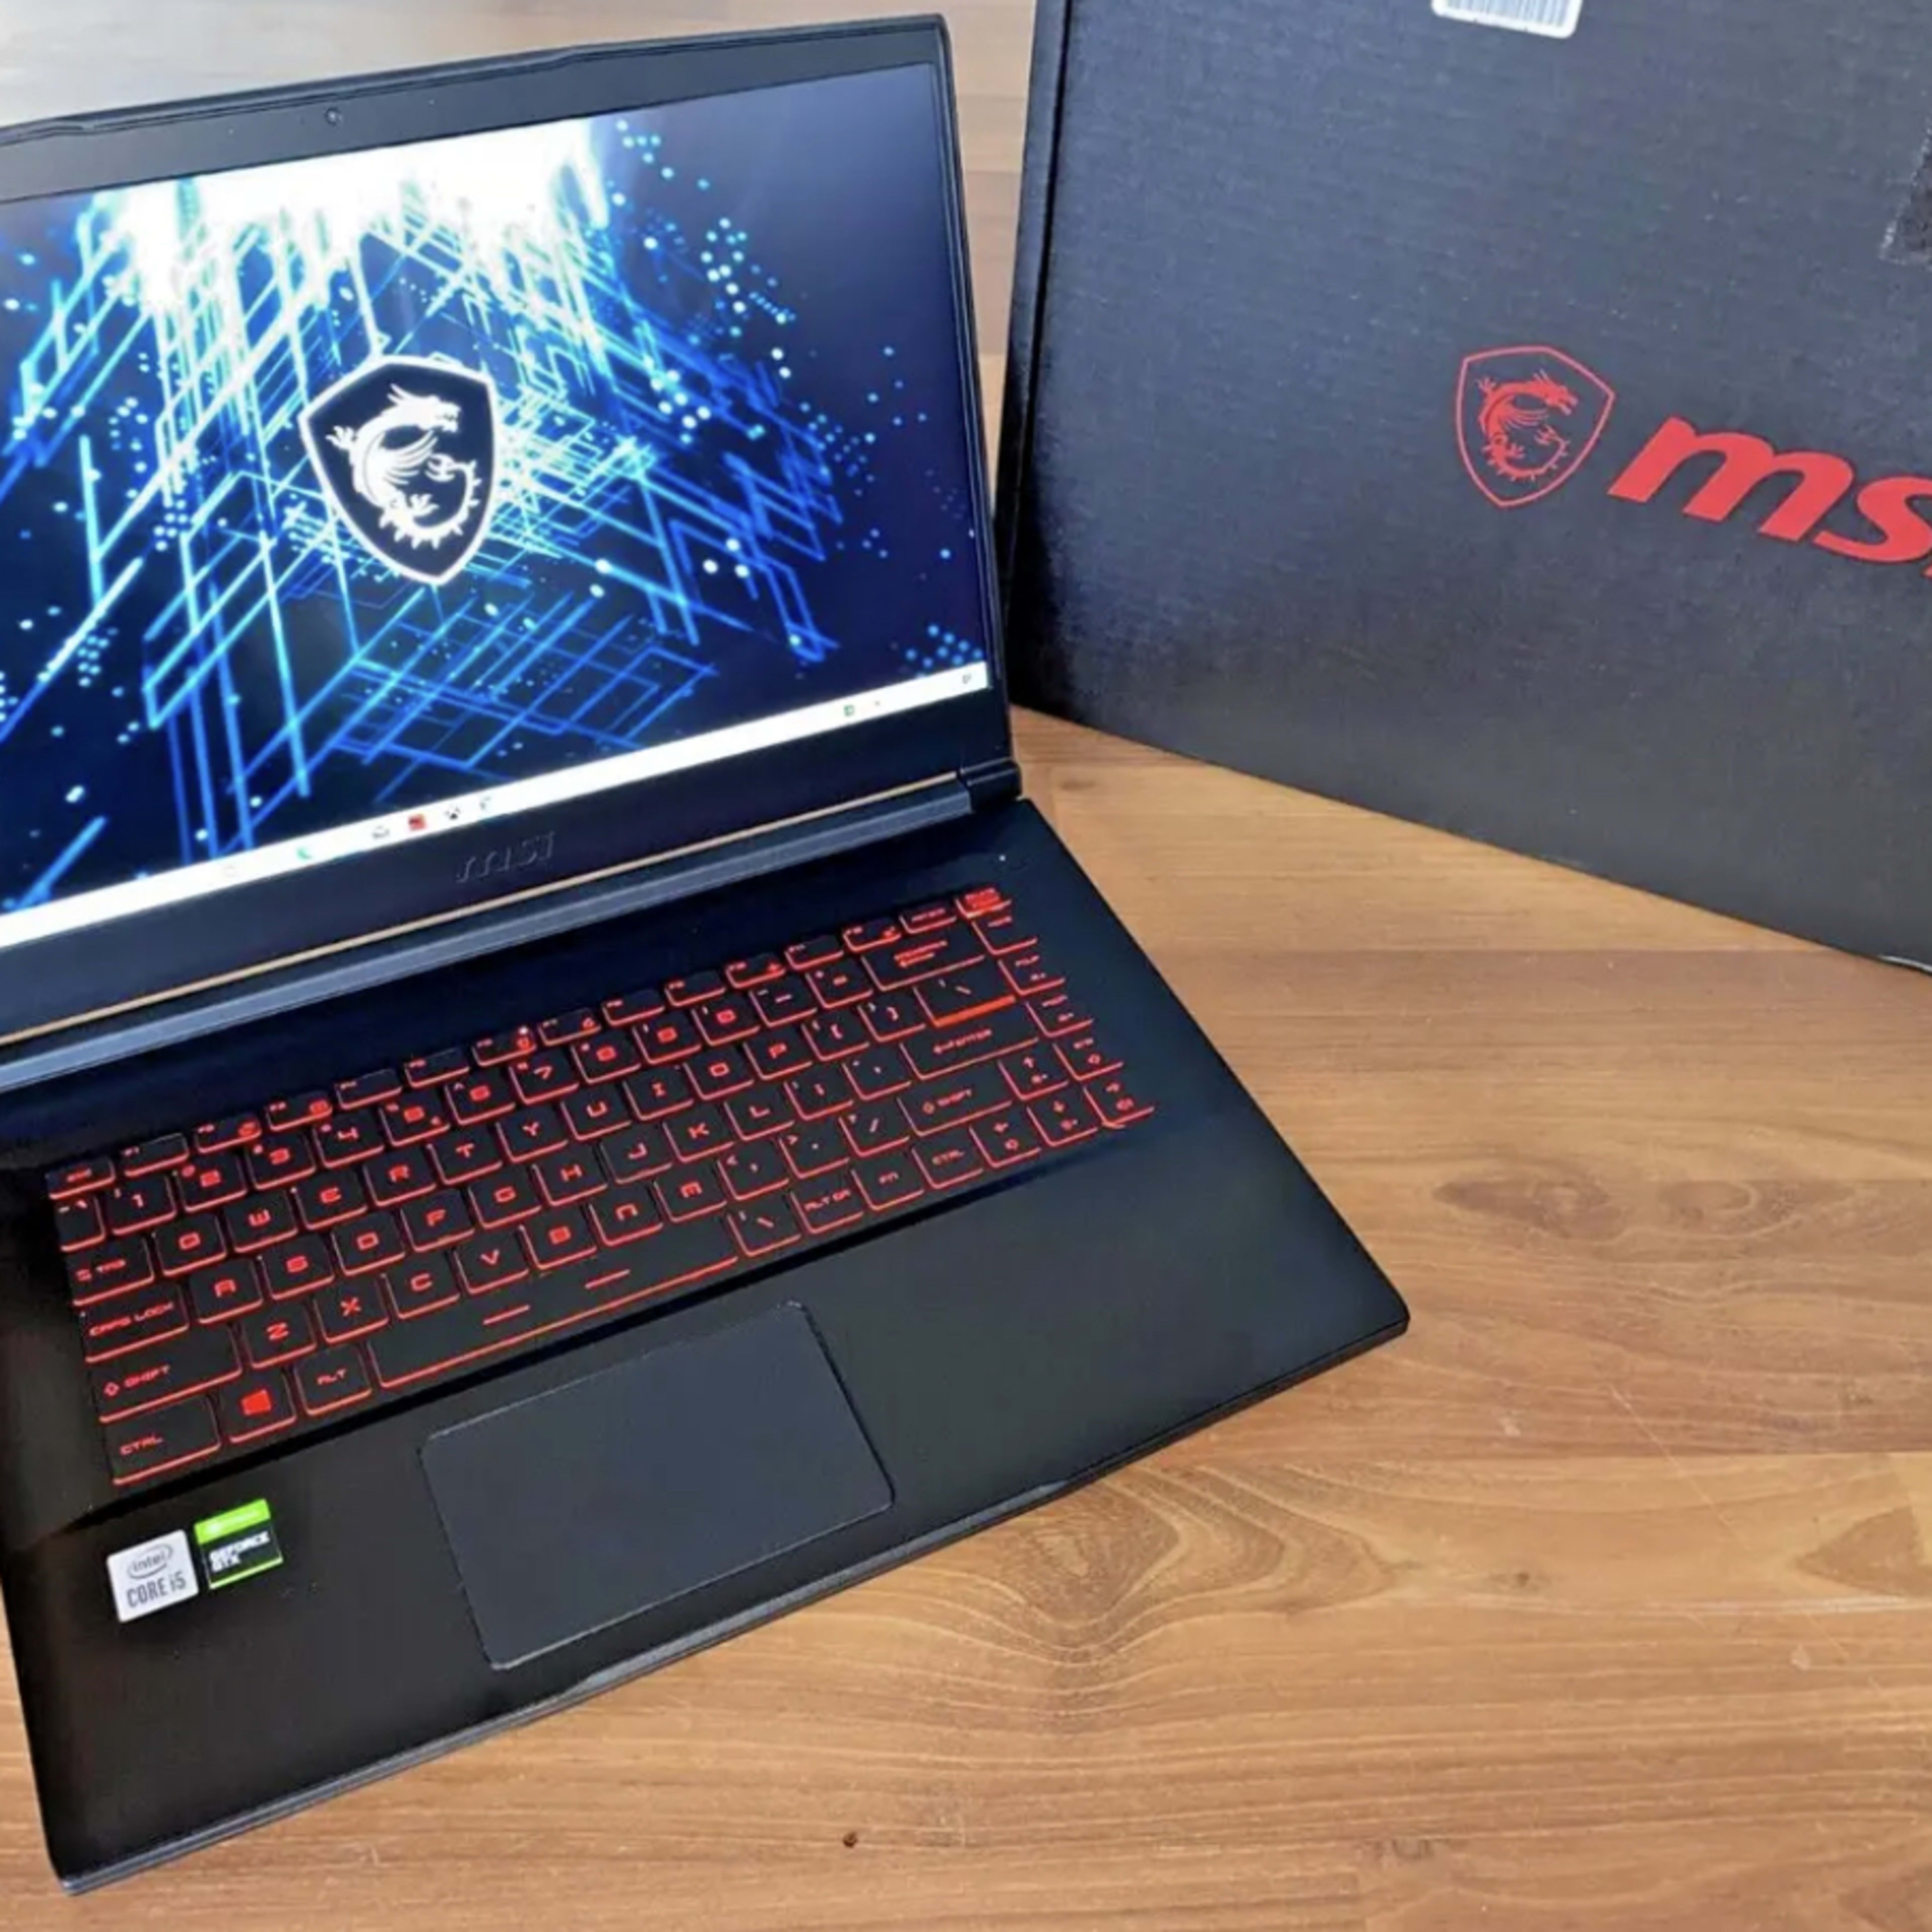 MSI Gaming laptop 10th gen i5 1650 gpu 8gb ram